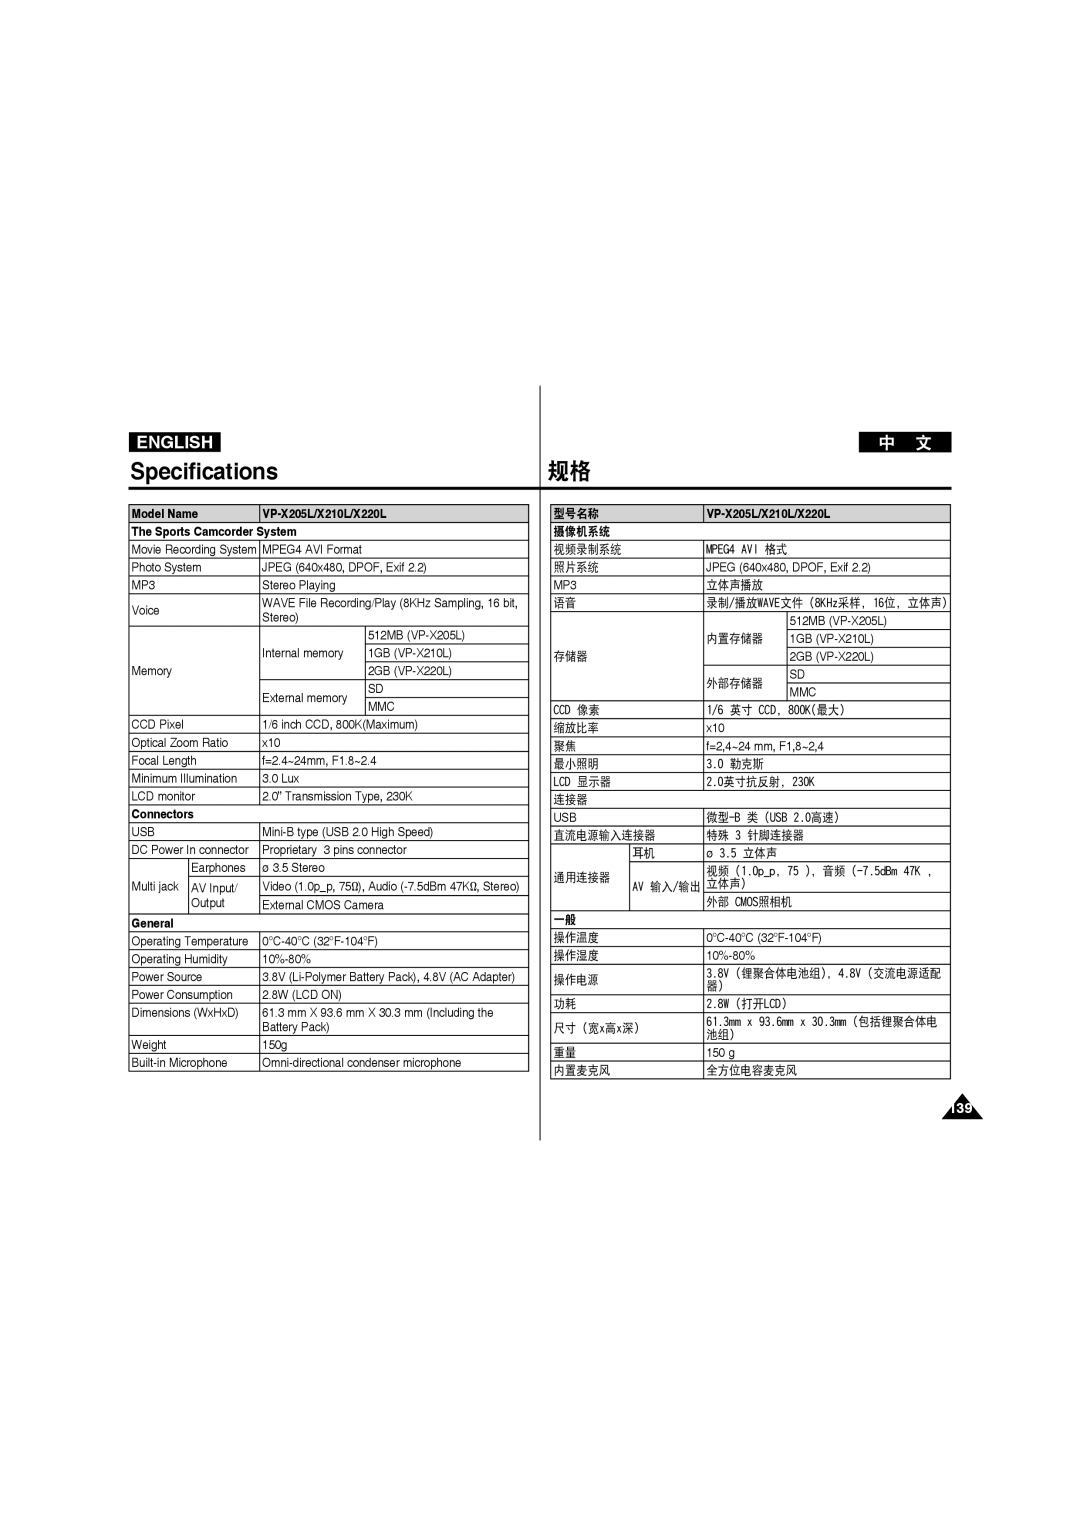 Samsung VP-X210L/MEA manual Specifications, Model Name VP-X205L/X210L/X220L Sports Camcorder System, Connectors, General 